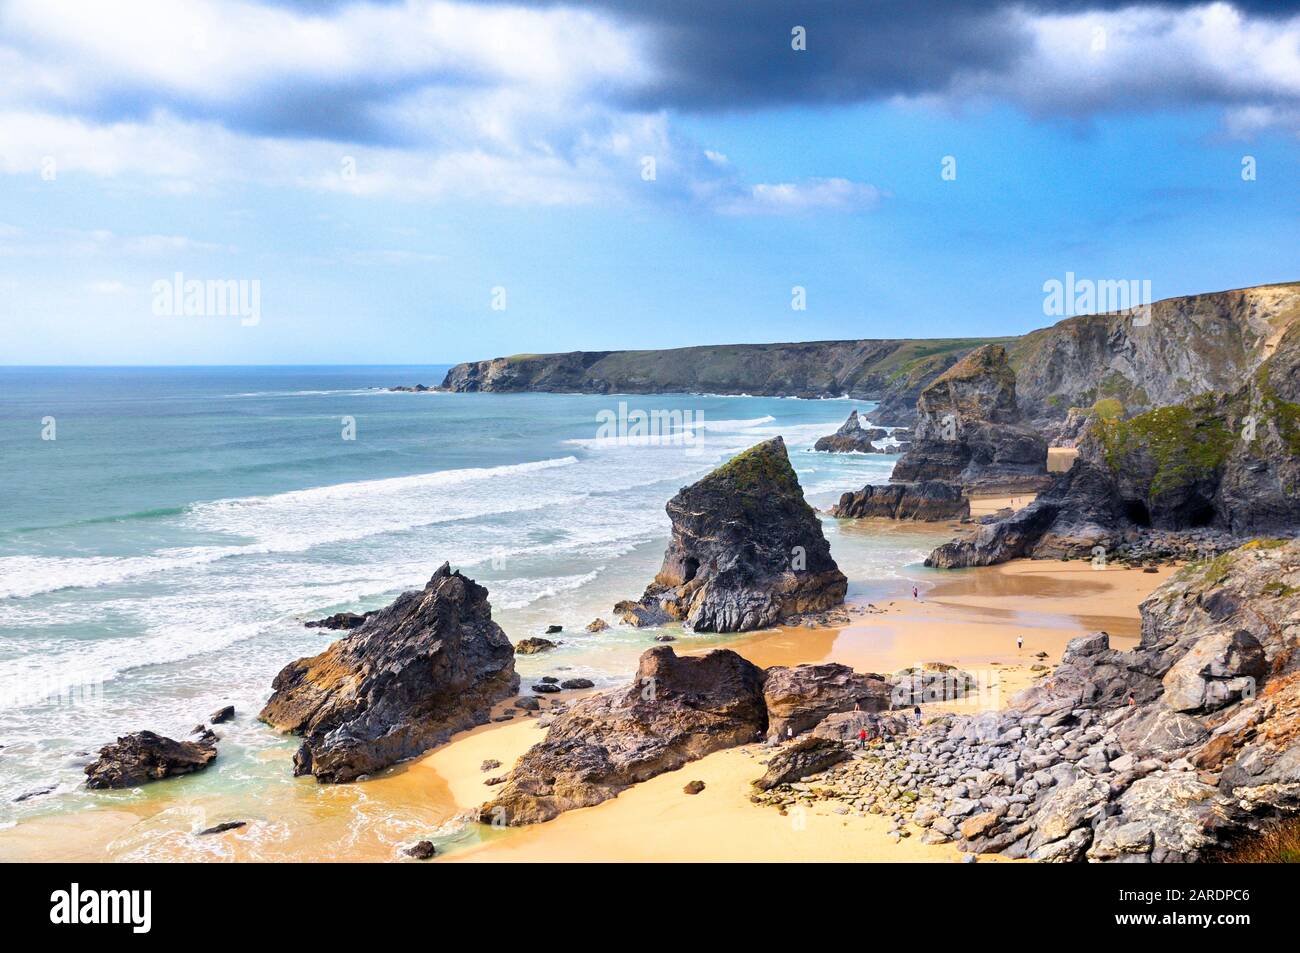 The dramatic Cornish coastline at Bedruthan Steps, Cornwall, England, UK Stock Photo